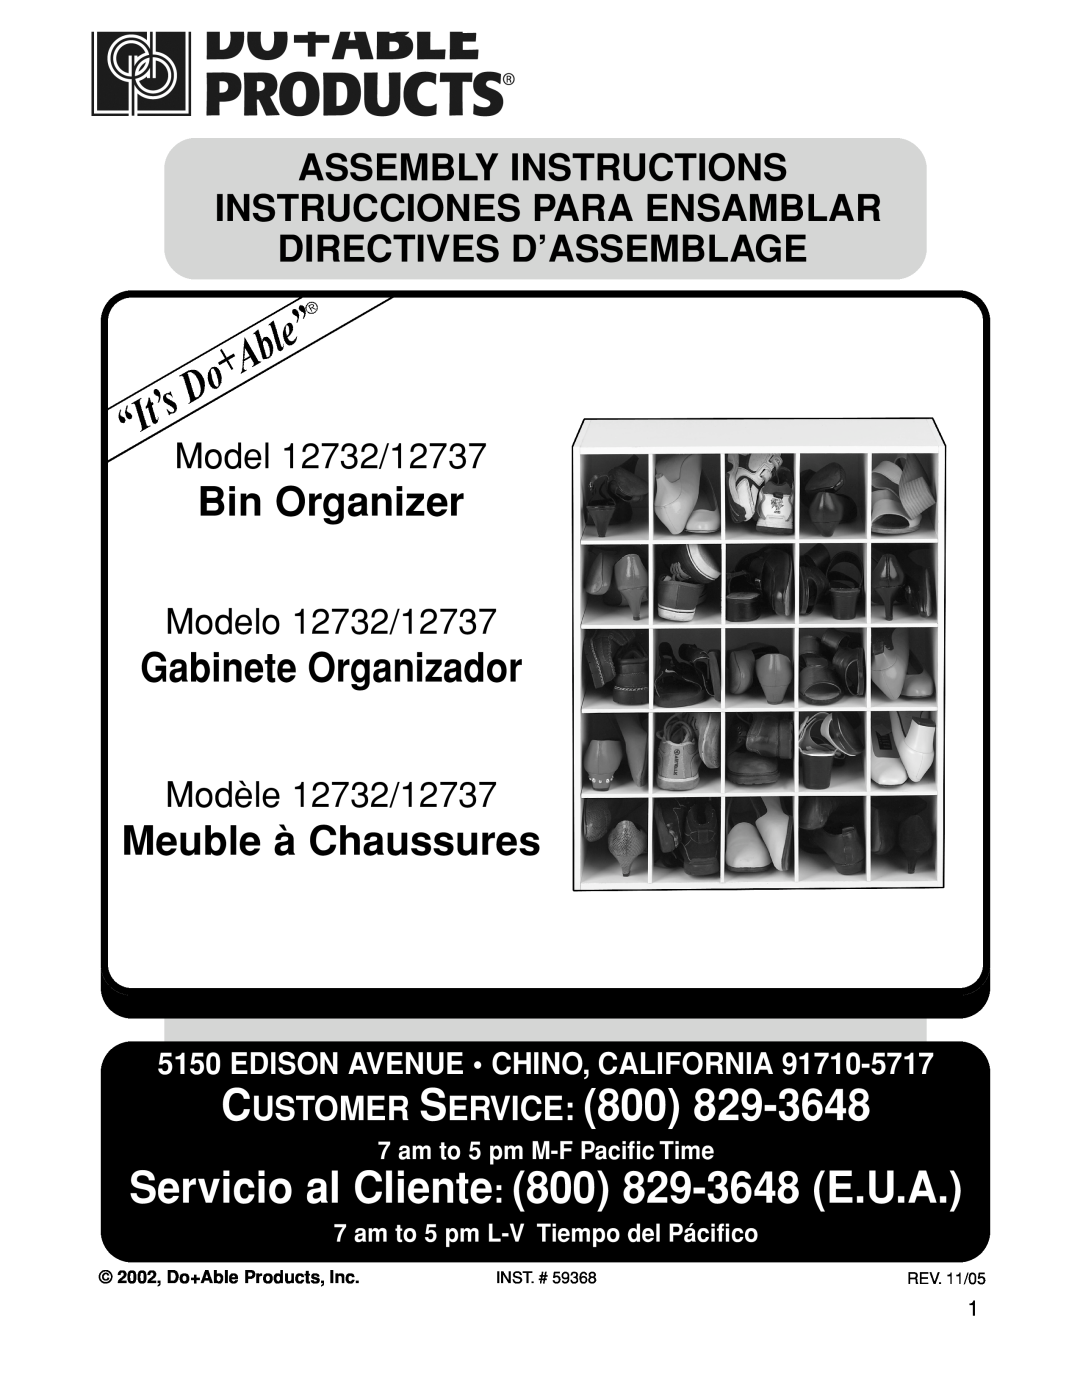 Closet Maid 12737 manual Customer Service, Servicio al Cliente 800 829-3648E.U.A, Bin Organizer, Gabinete Organizador 